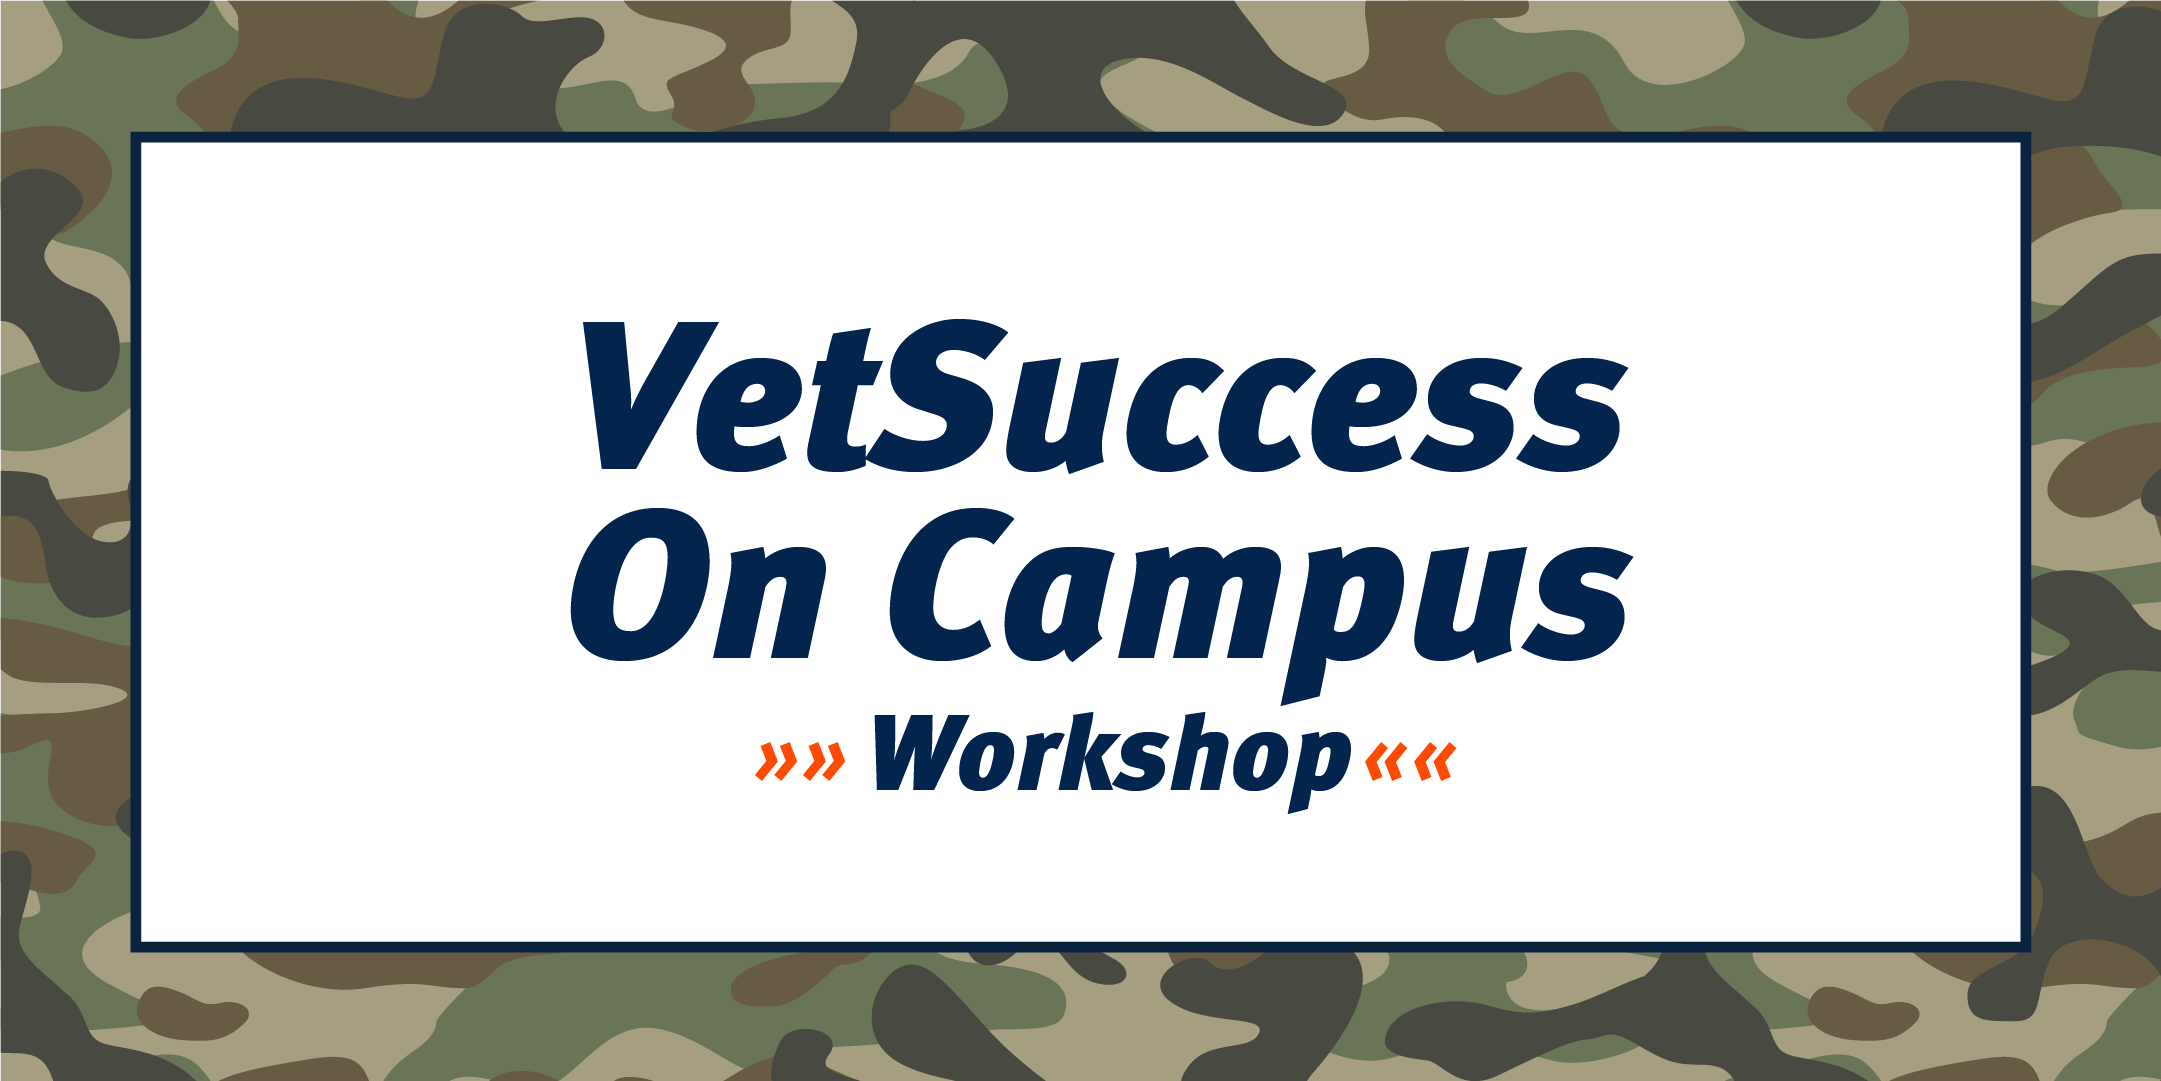 VetSuccess on Campus Workshop